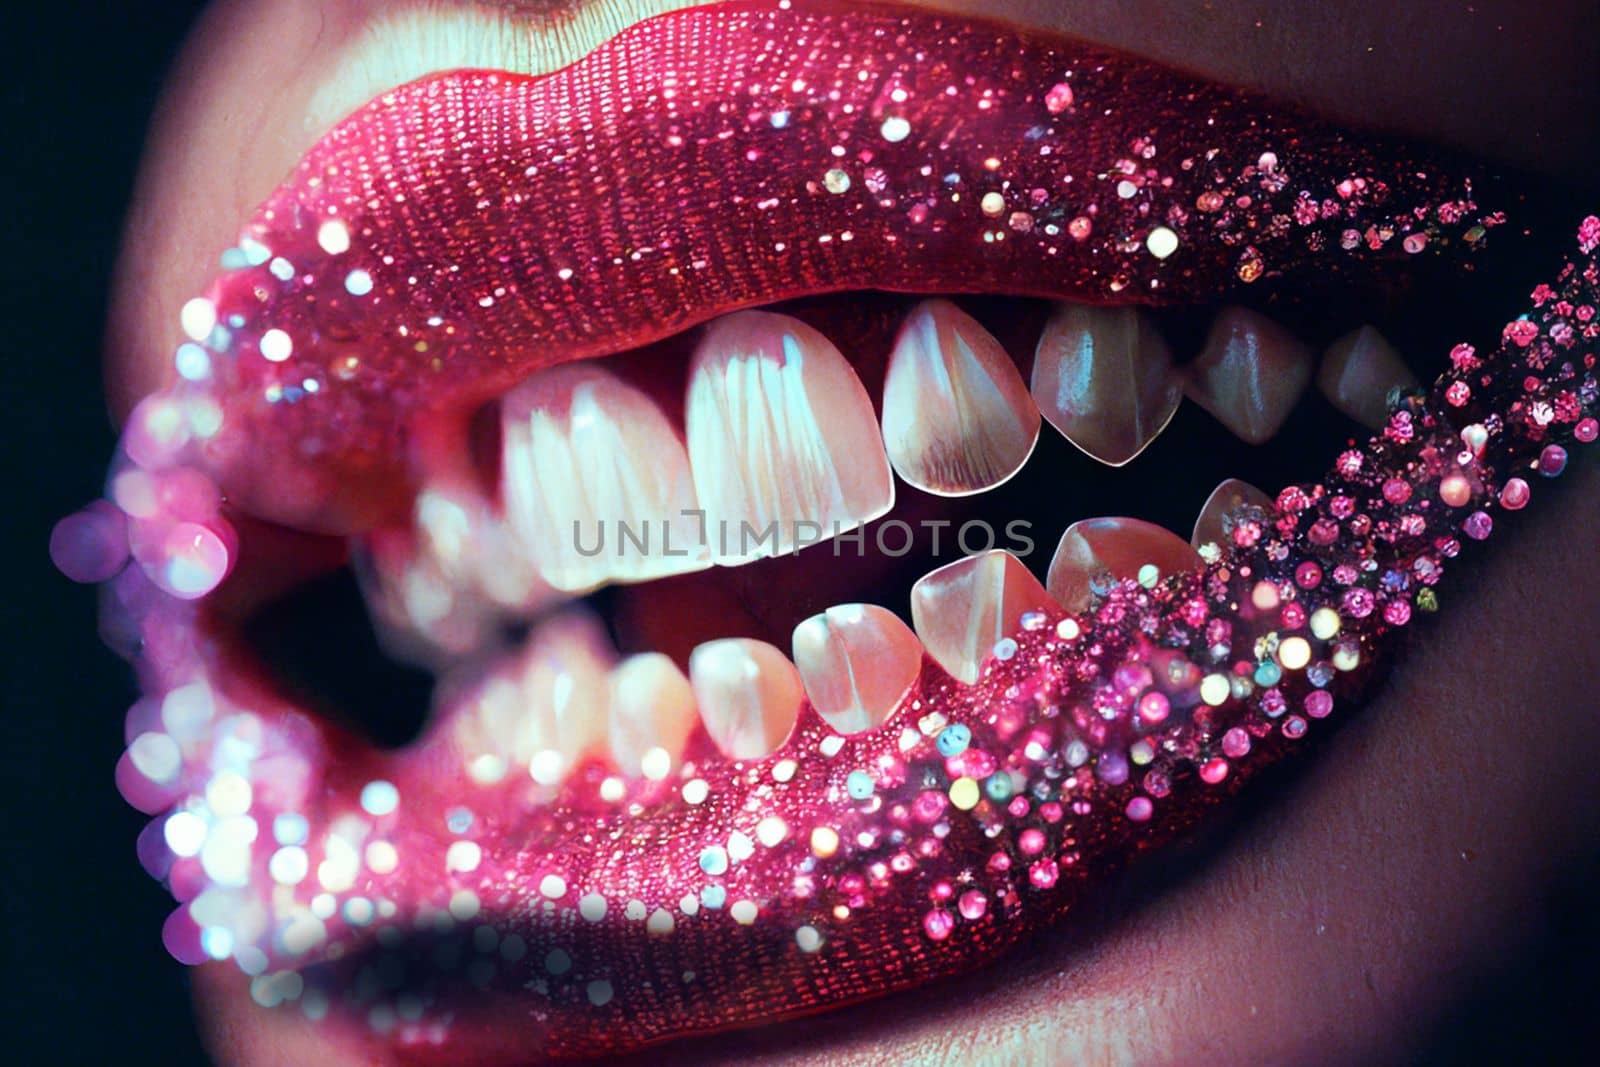 red lips in rhinestones close-up in 6k